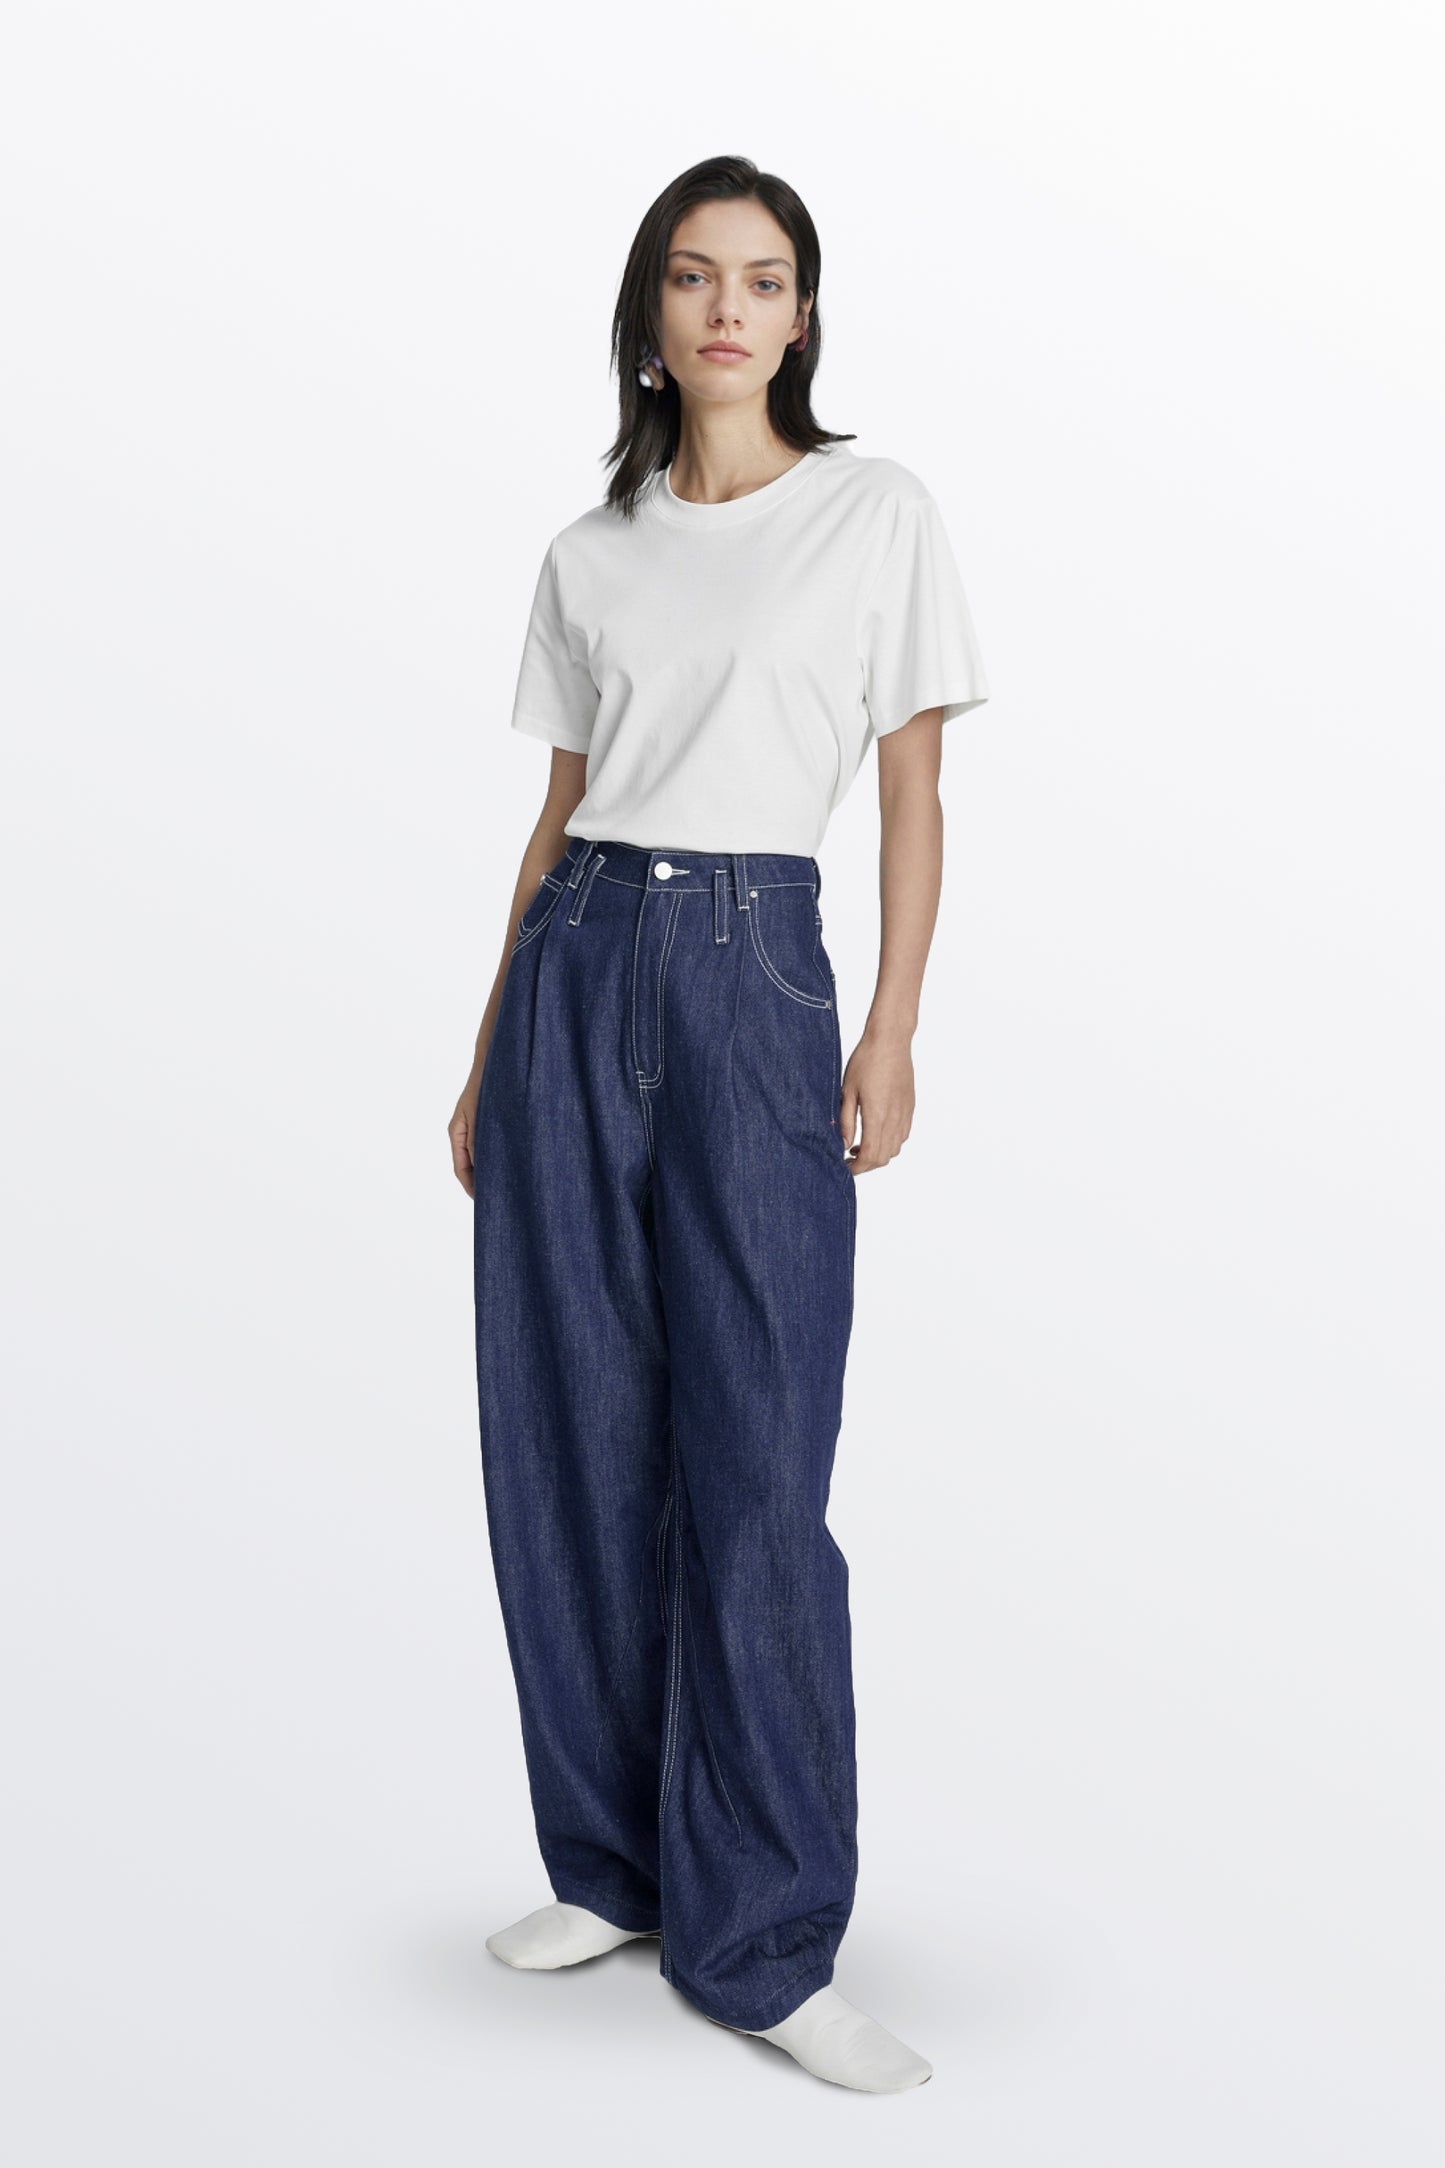 Classiq High-Waisted Denim Jeans in Cotton Blend